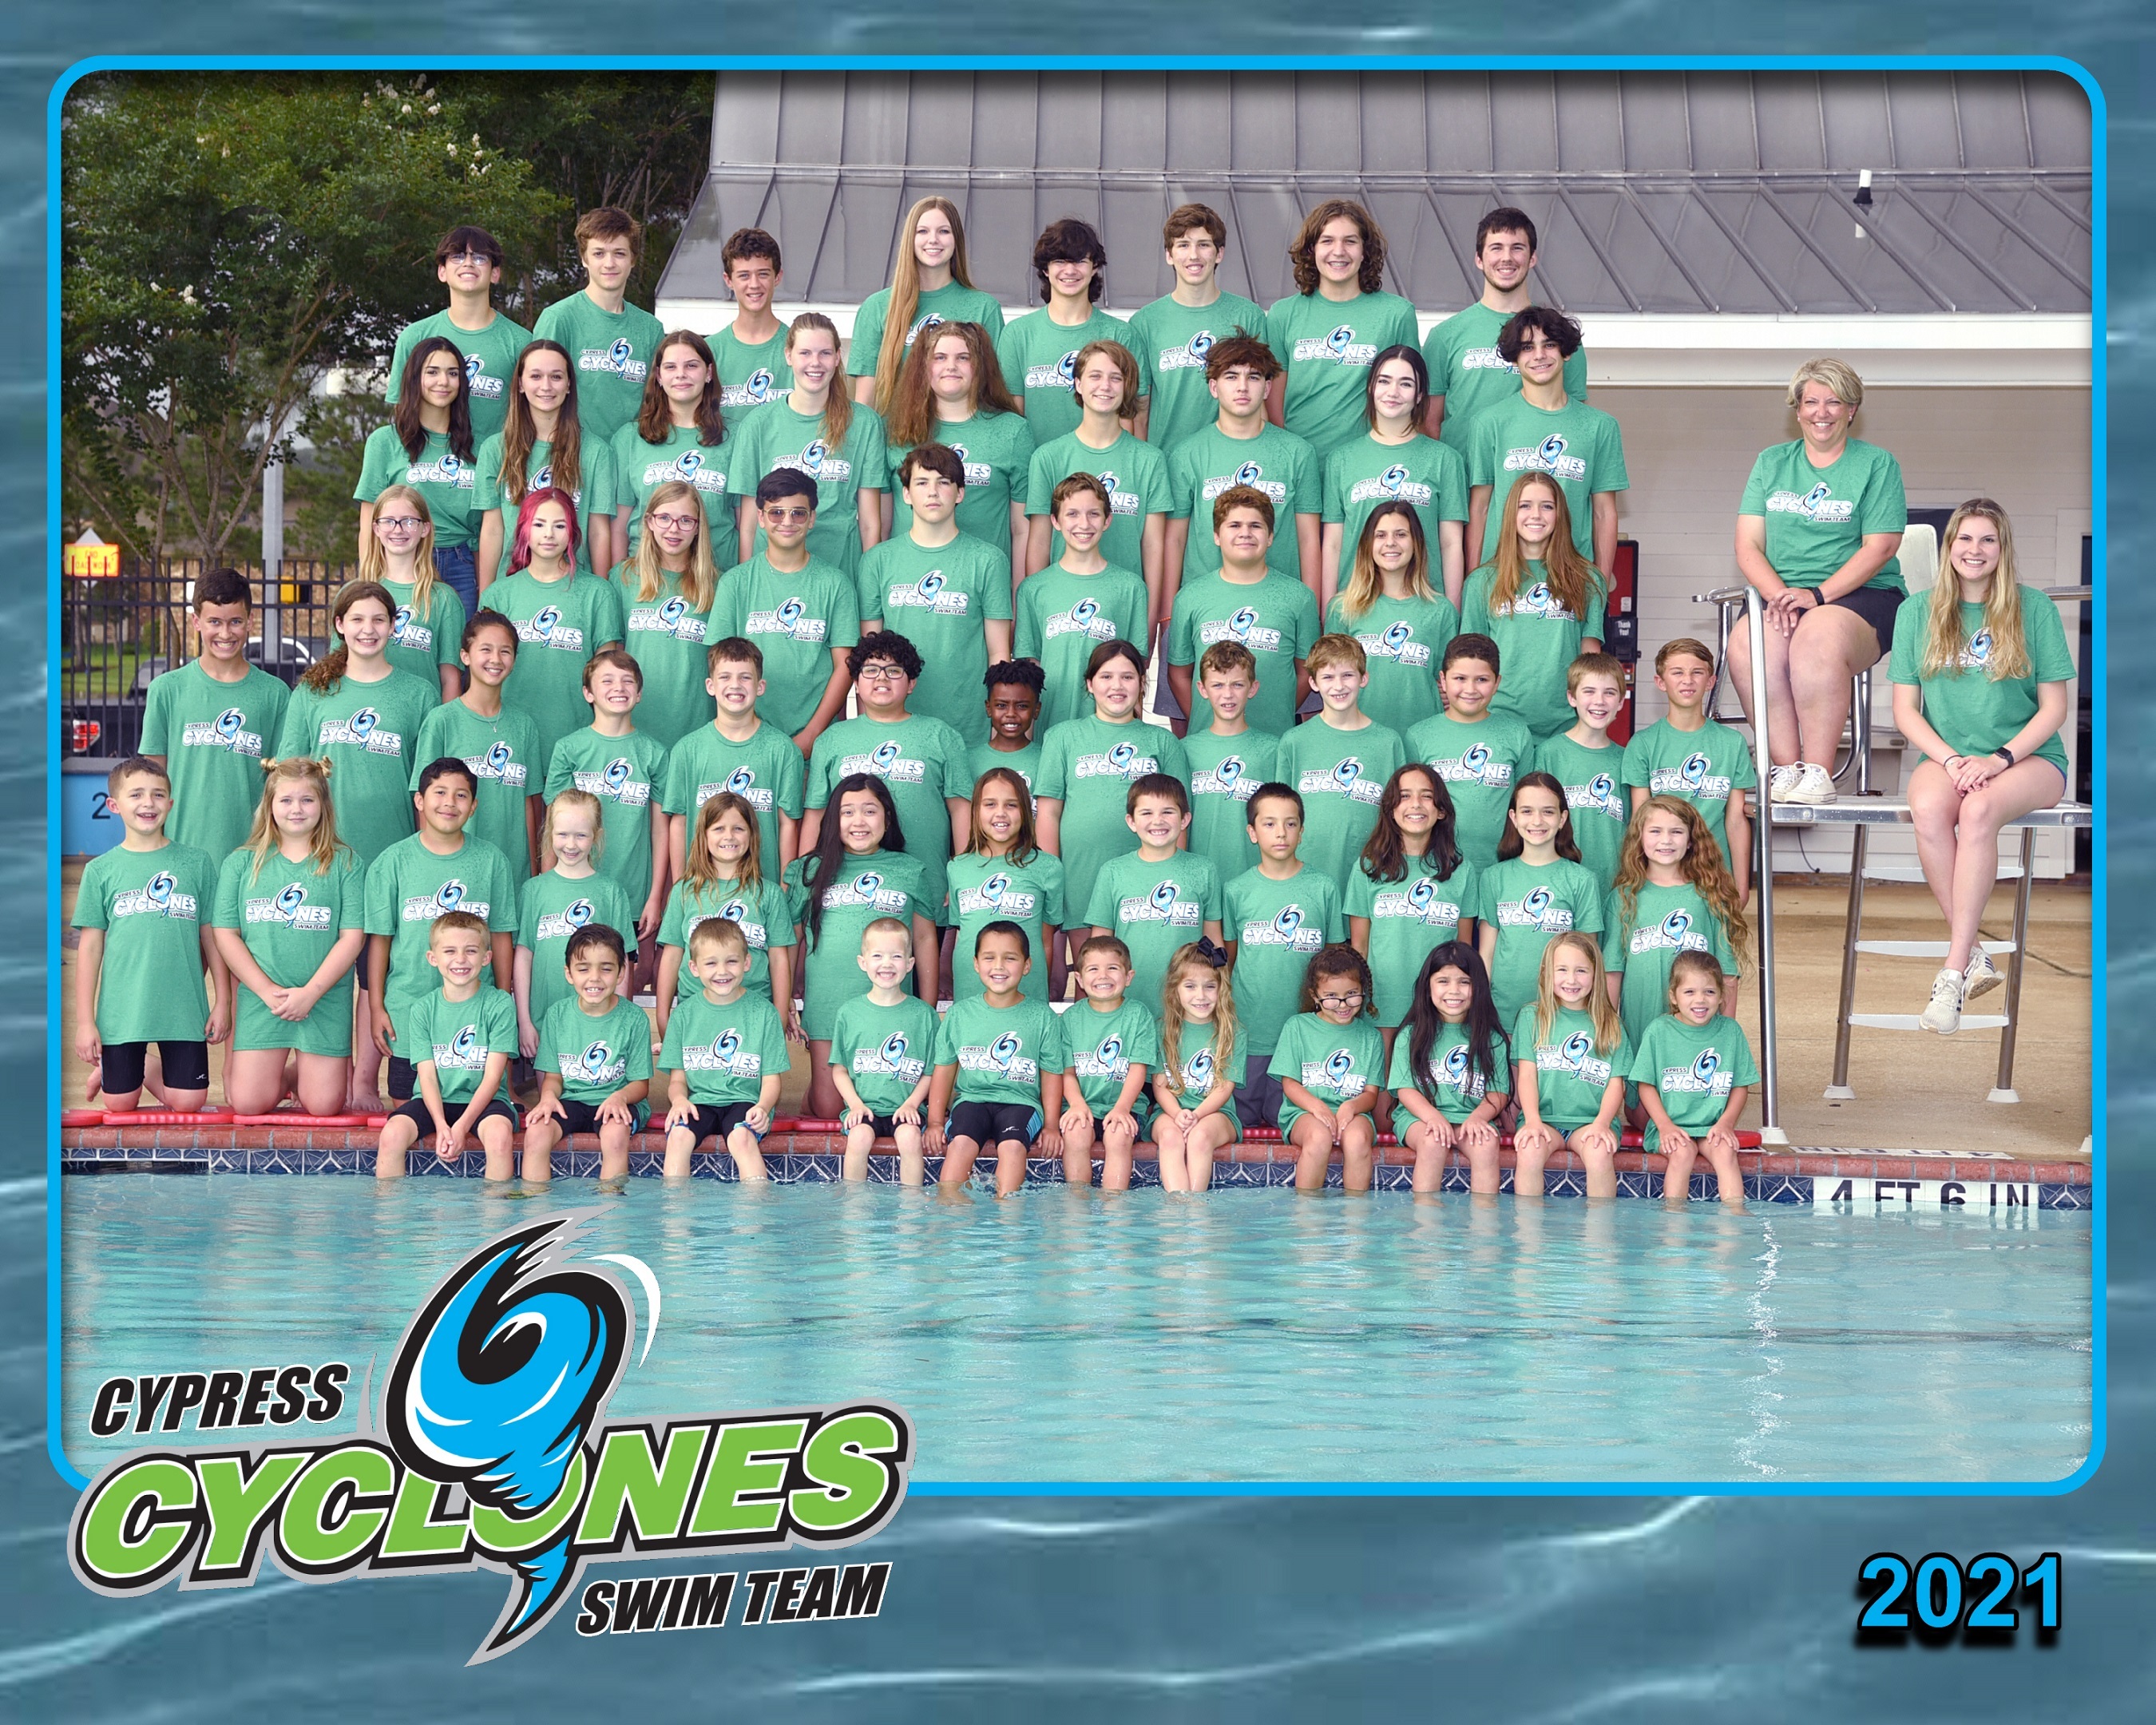 Cypress Cyclones Swim Team